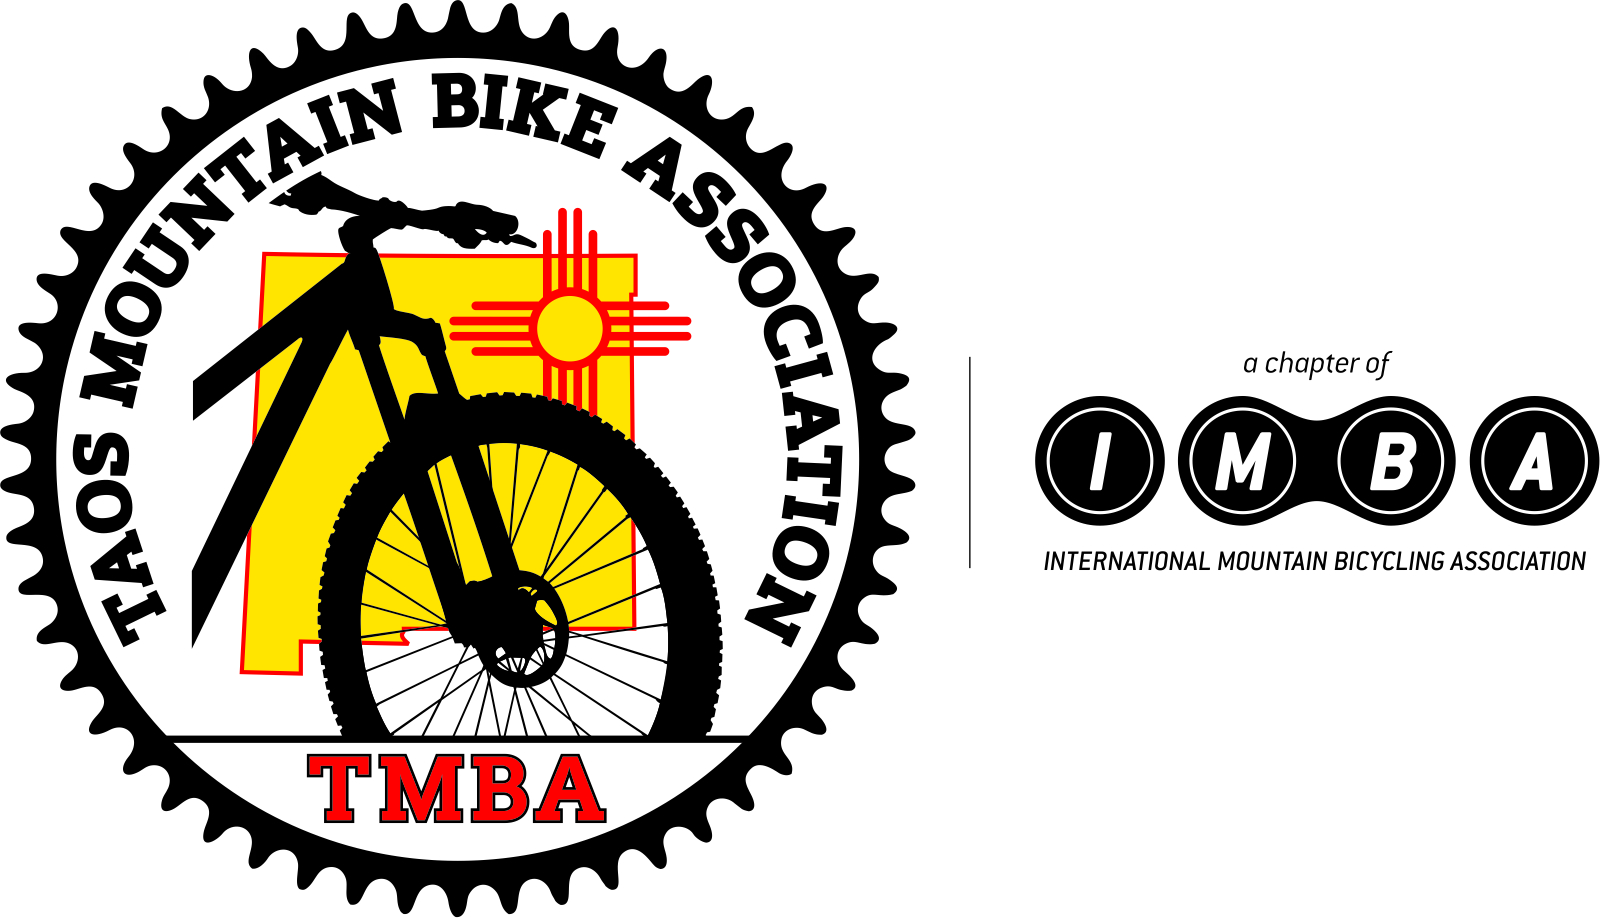 Taos Mountain Bike Association